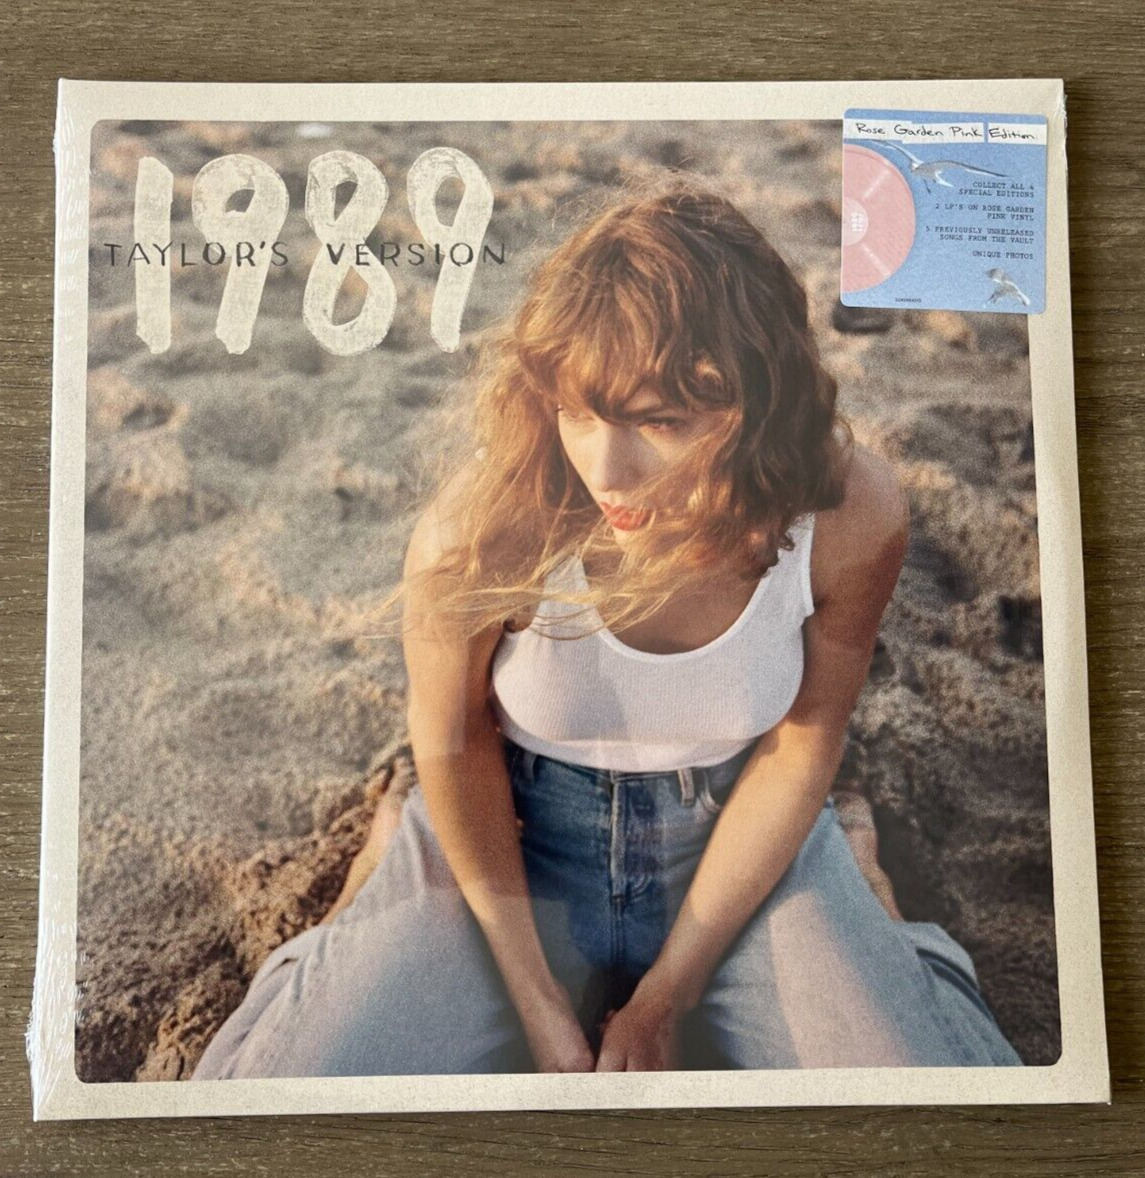 1989 (Taylor's Version) Rose Garden Pink Edition Vinyl (IN PLASTIC)